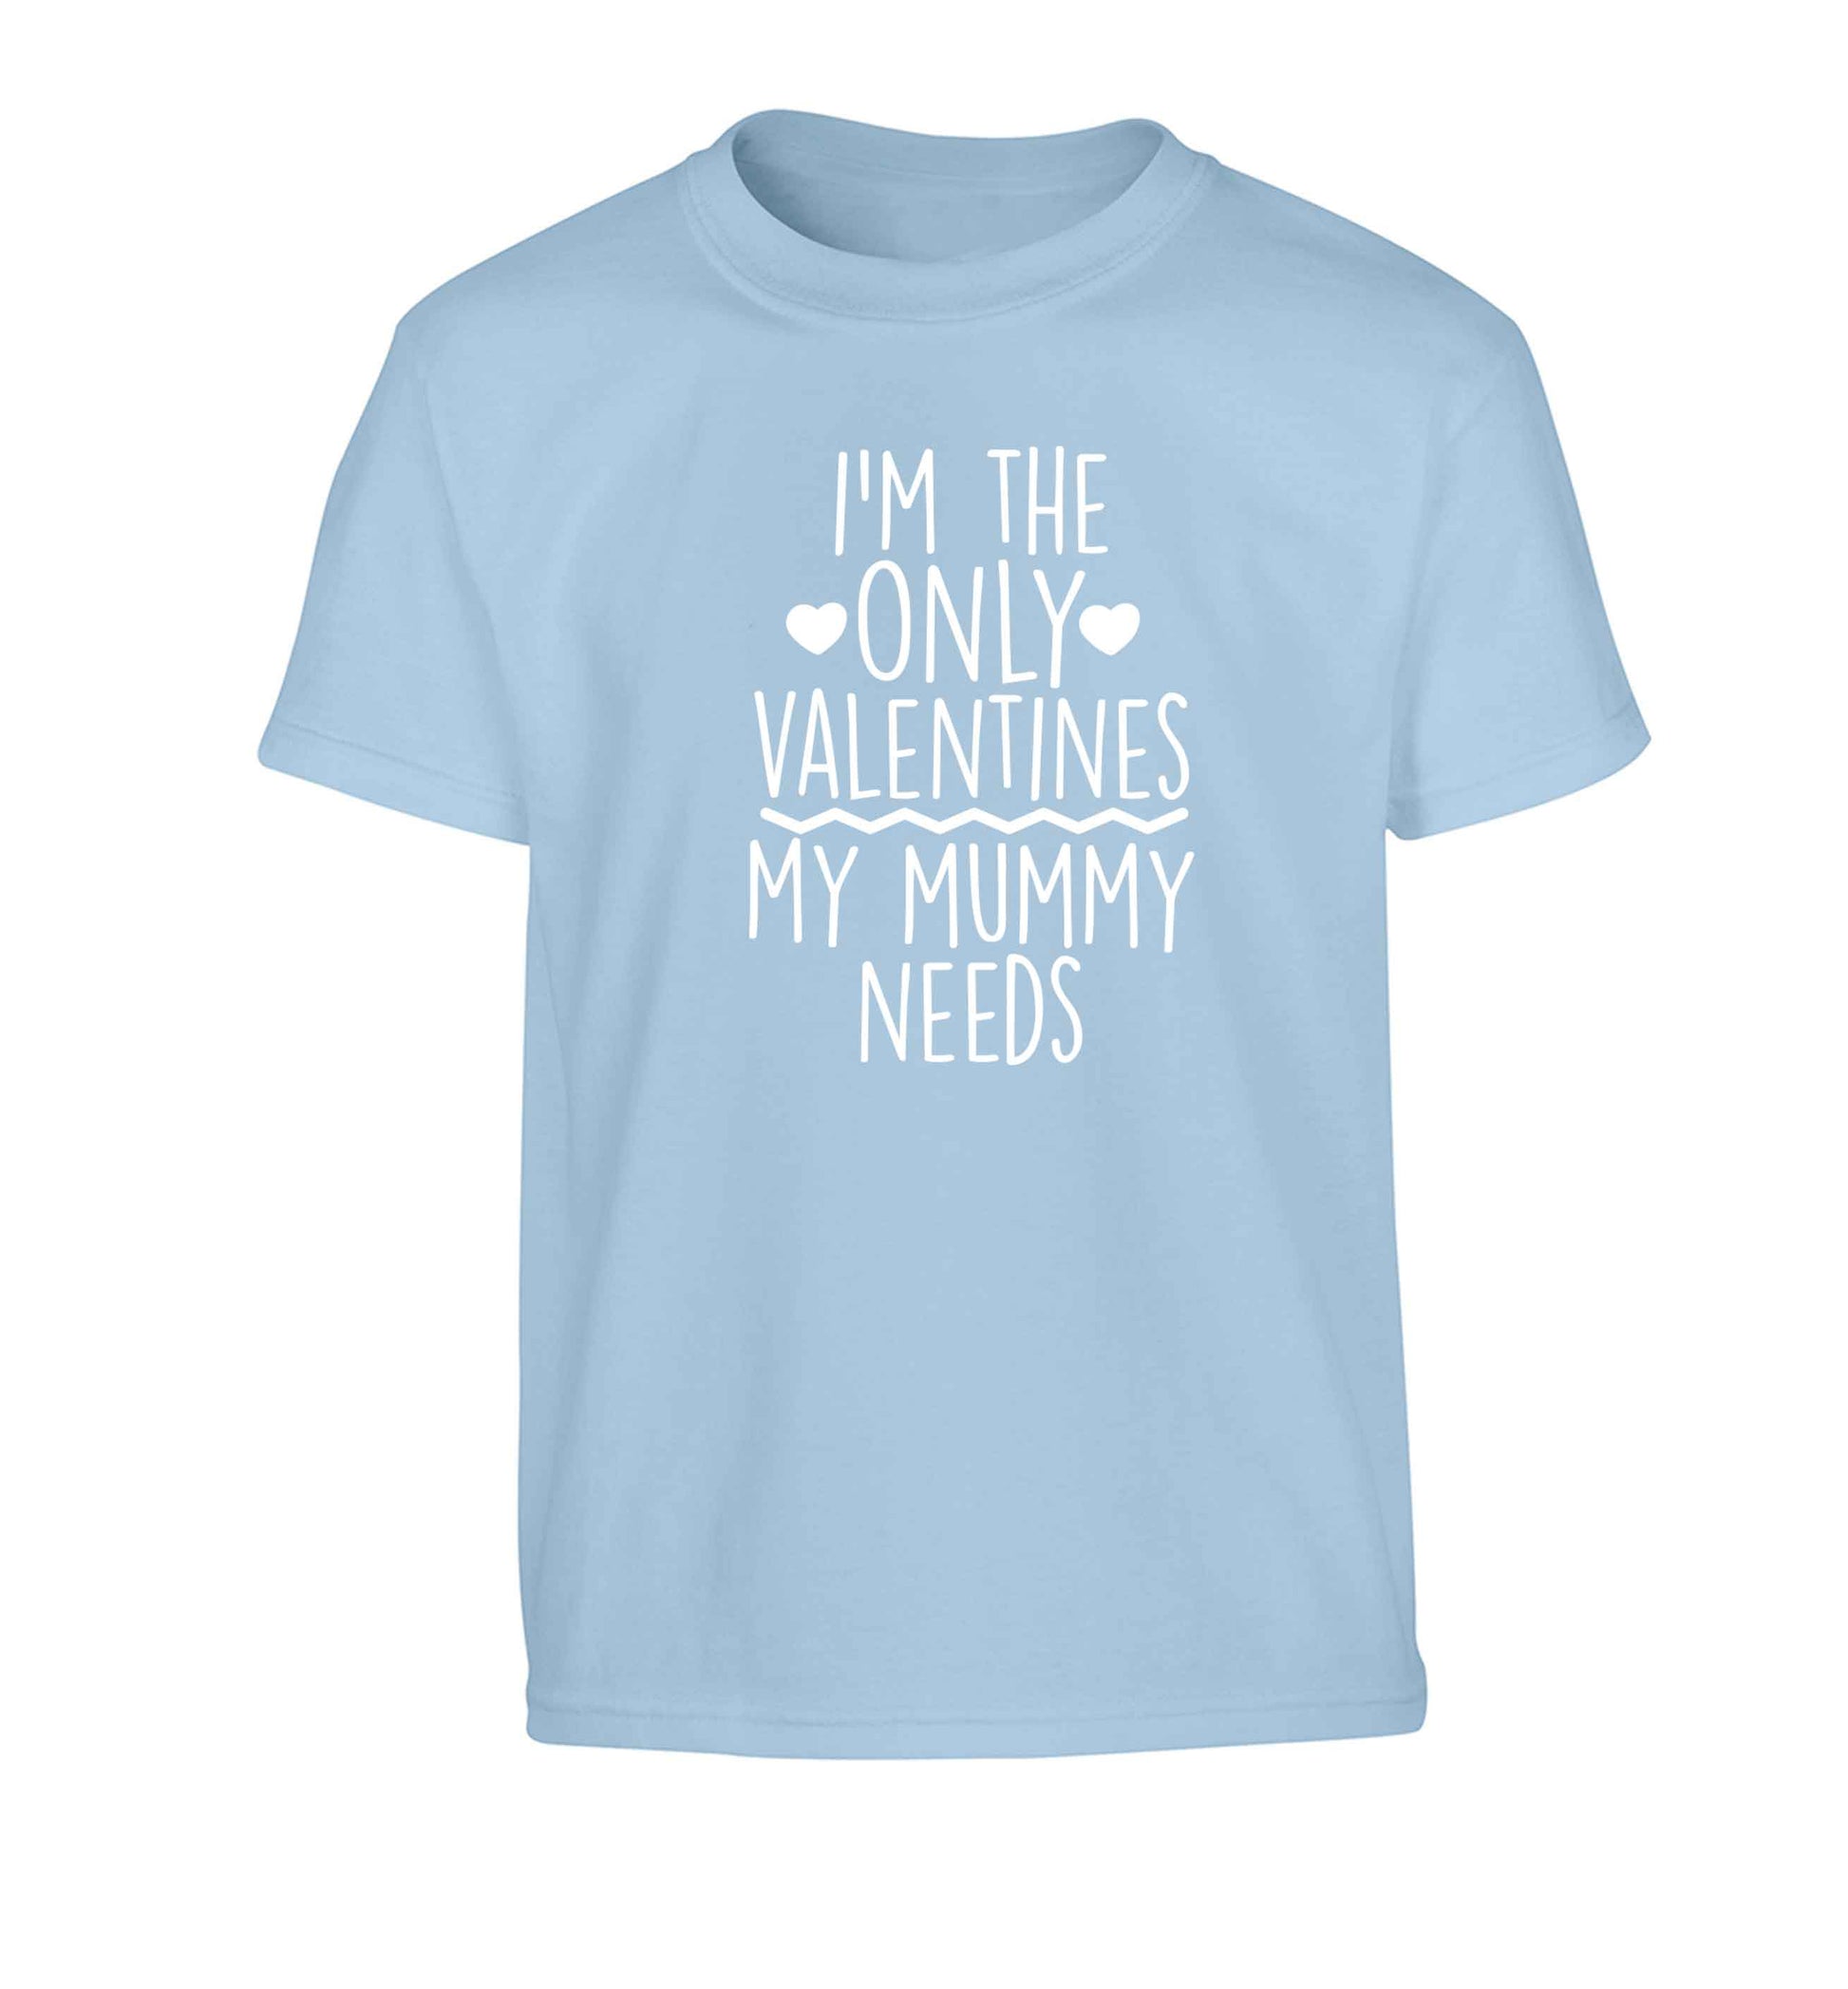 I'm the only valentines my mummy needs Children's light blue Tshirt 12-13 Years